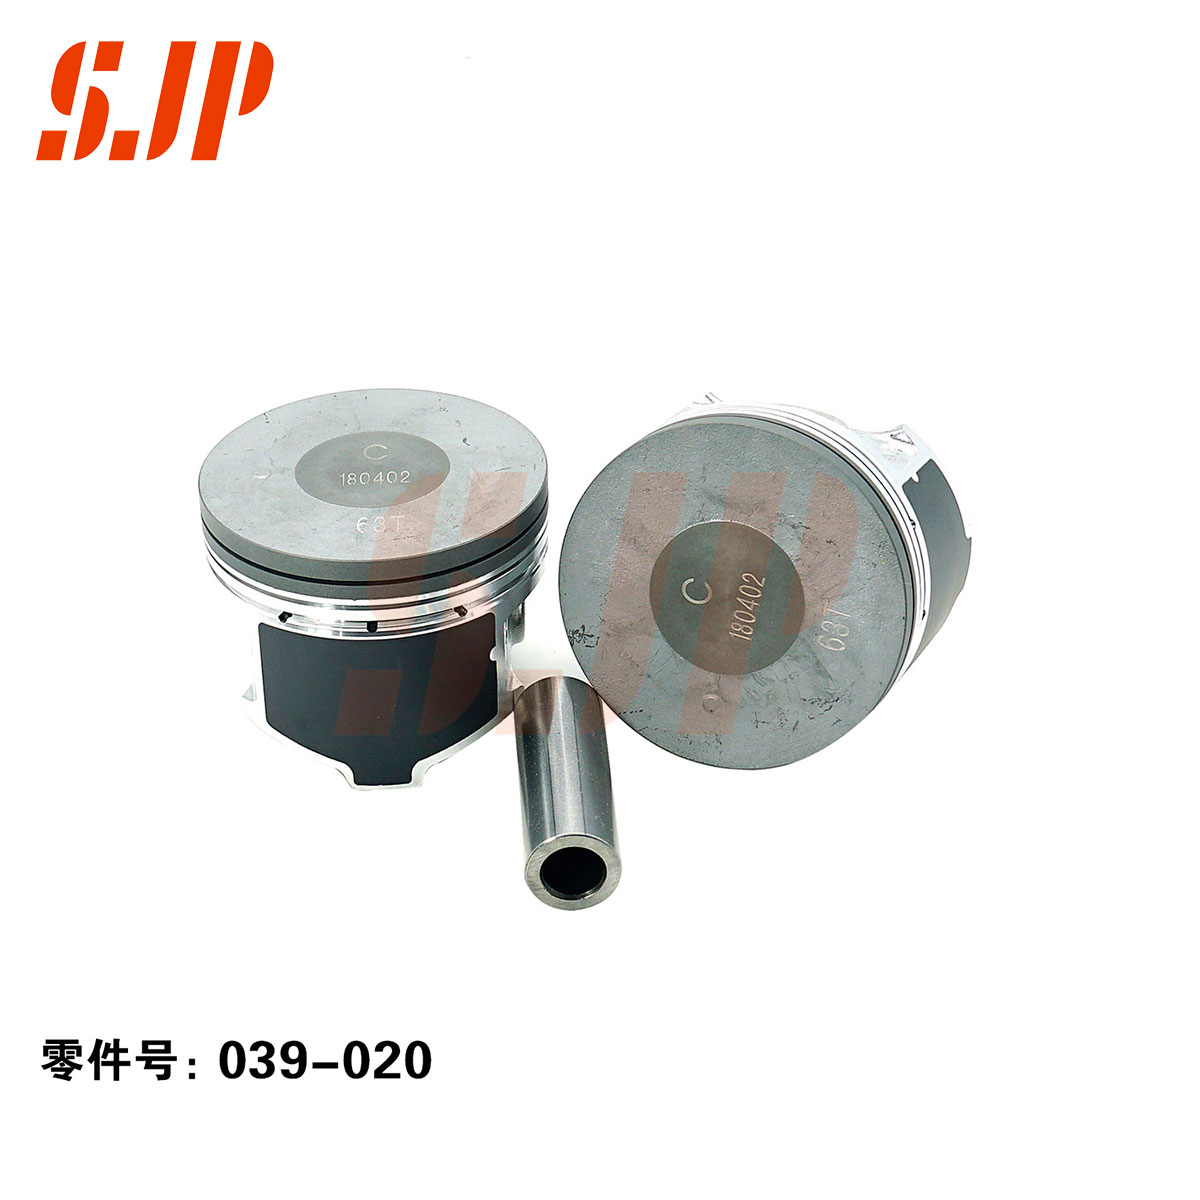 SJ-039-020 Piston And Pin For Mitsubishi 4G63T